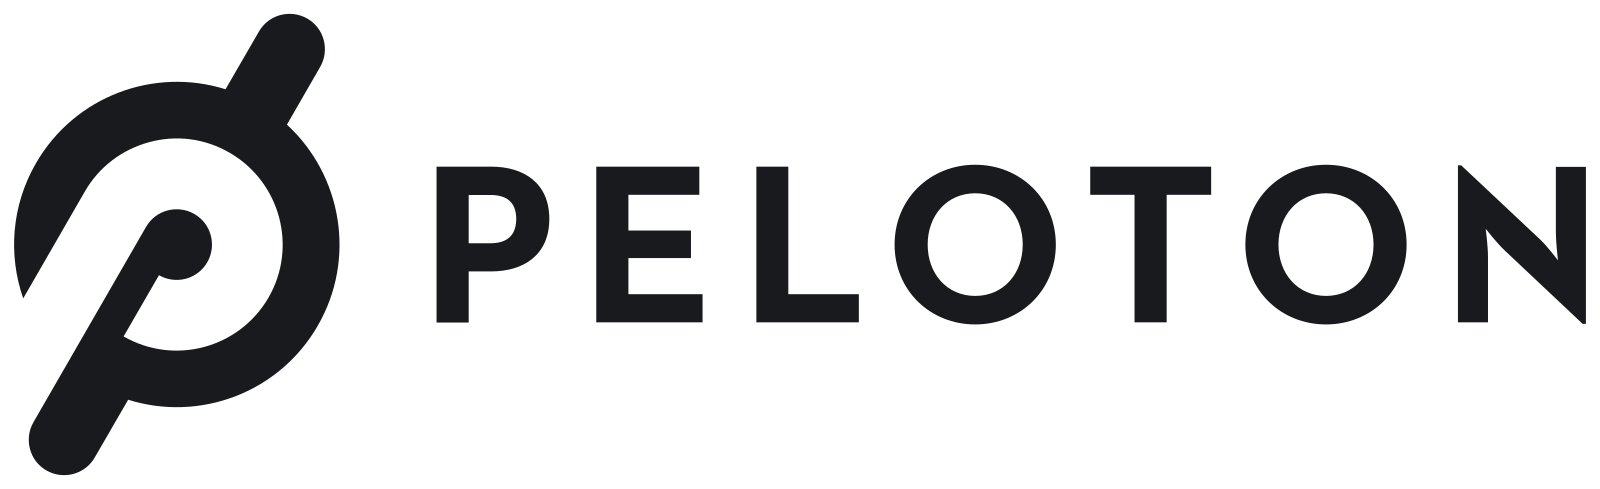 Peloton_(Unternehmen)_logo.svg.png